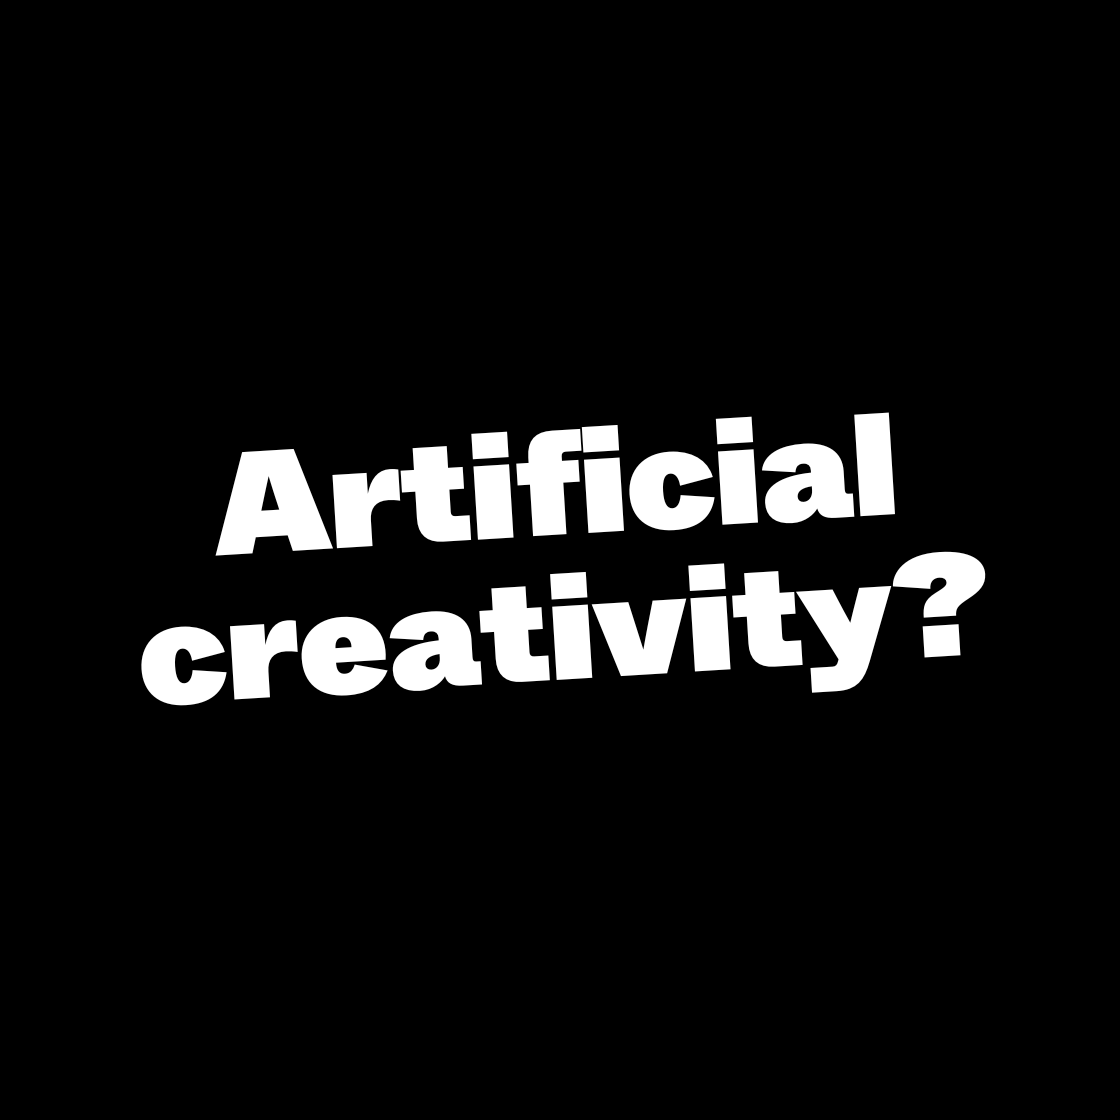 Artificial creativity?